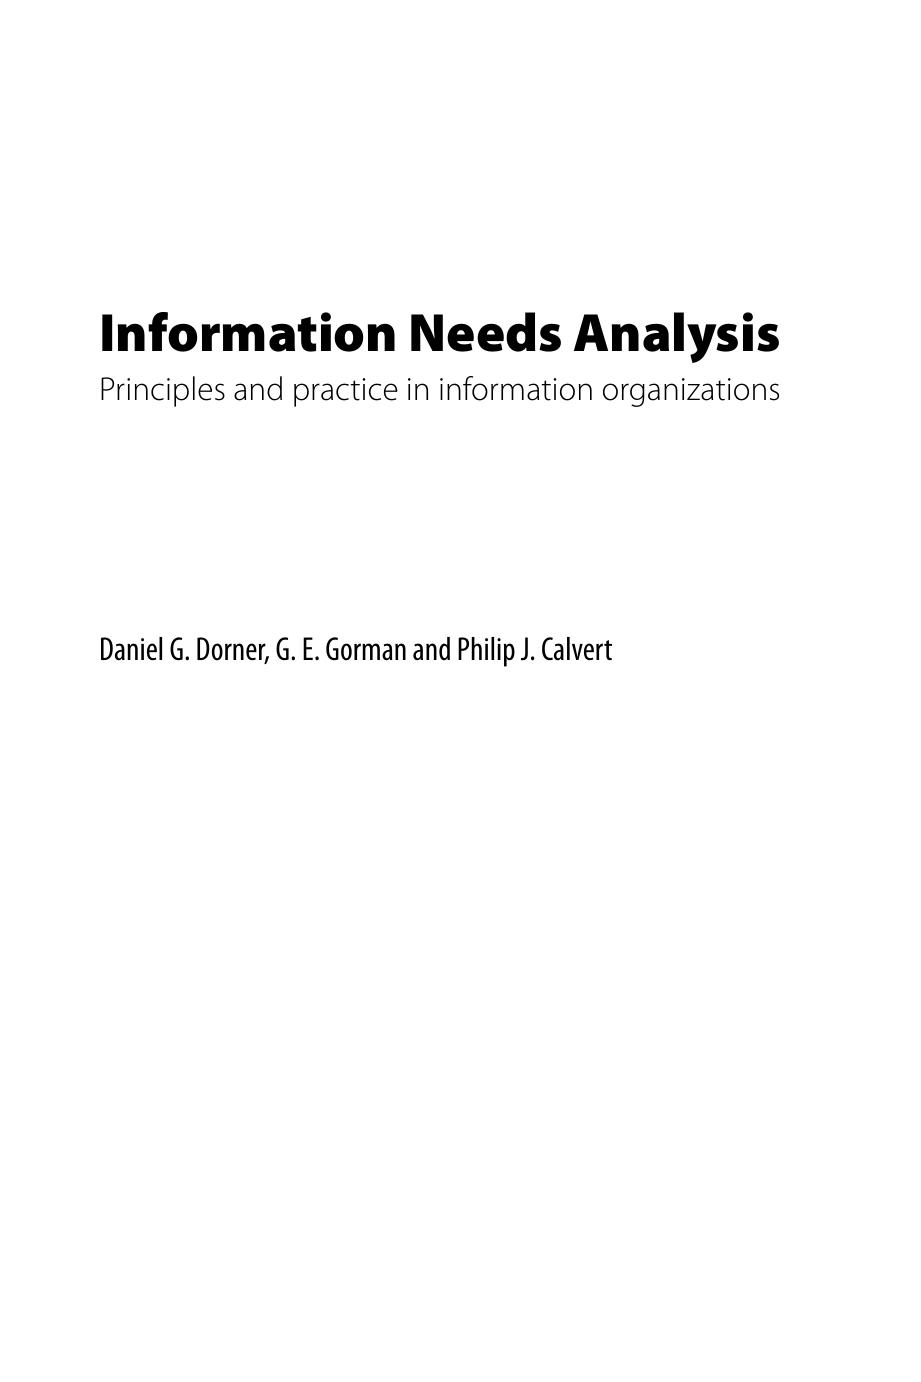 Information Needs Analysis : Principles and practice in information organizations by Daniel G. Dorner; G E Gorman; Philip J. Calvert